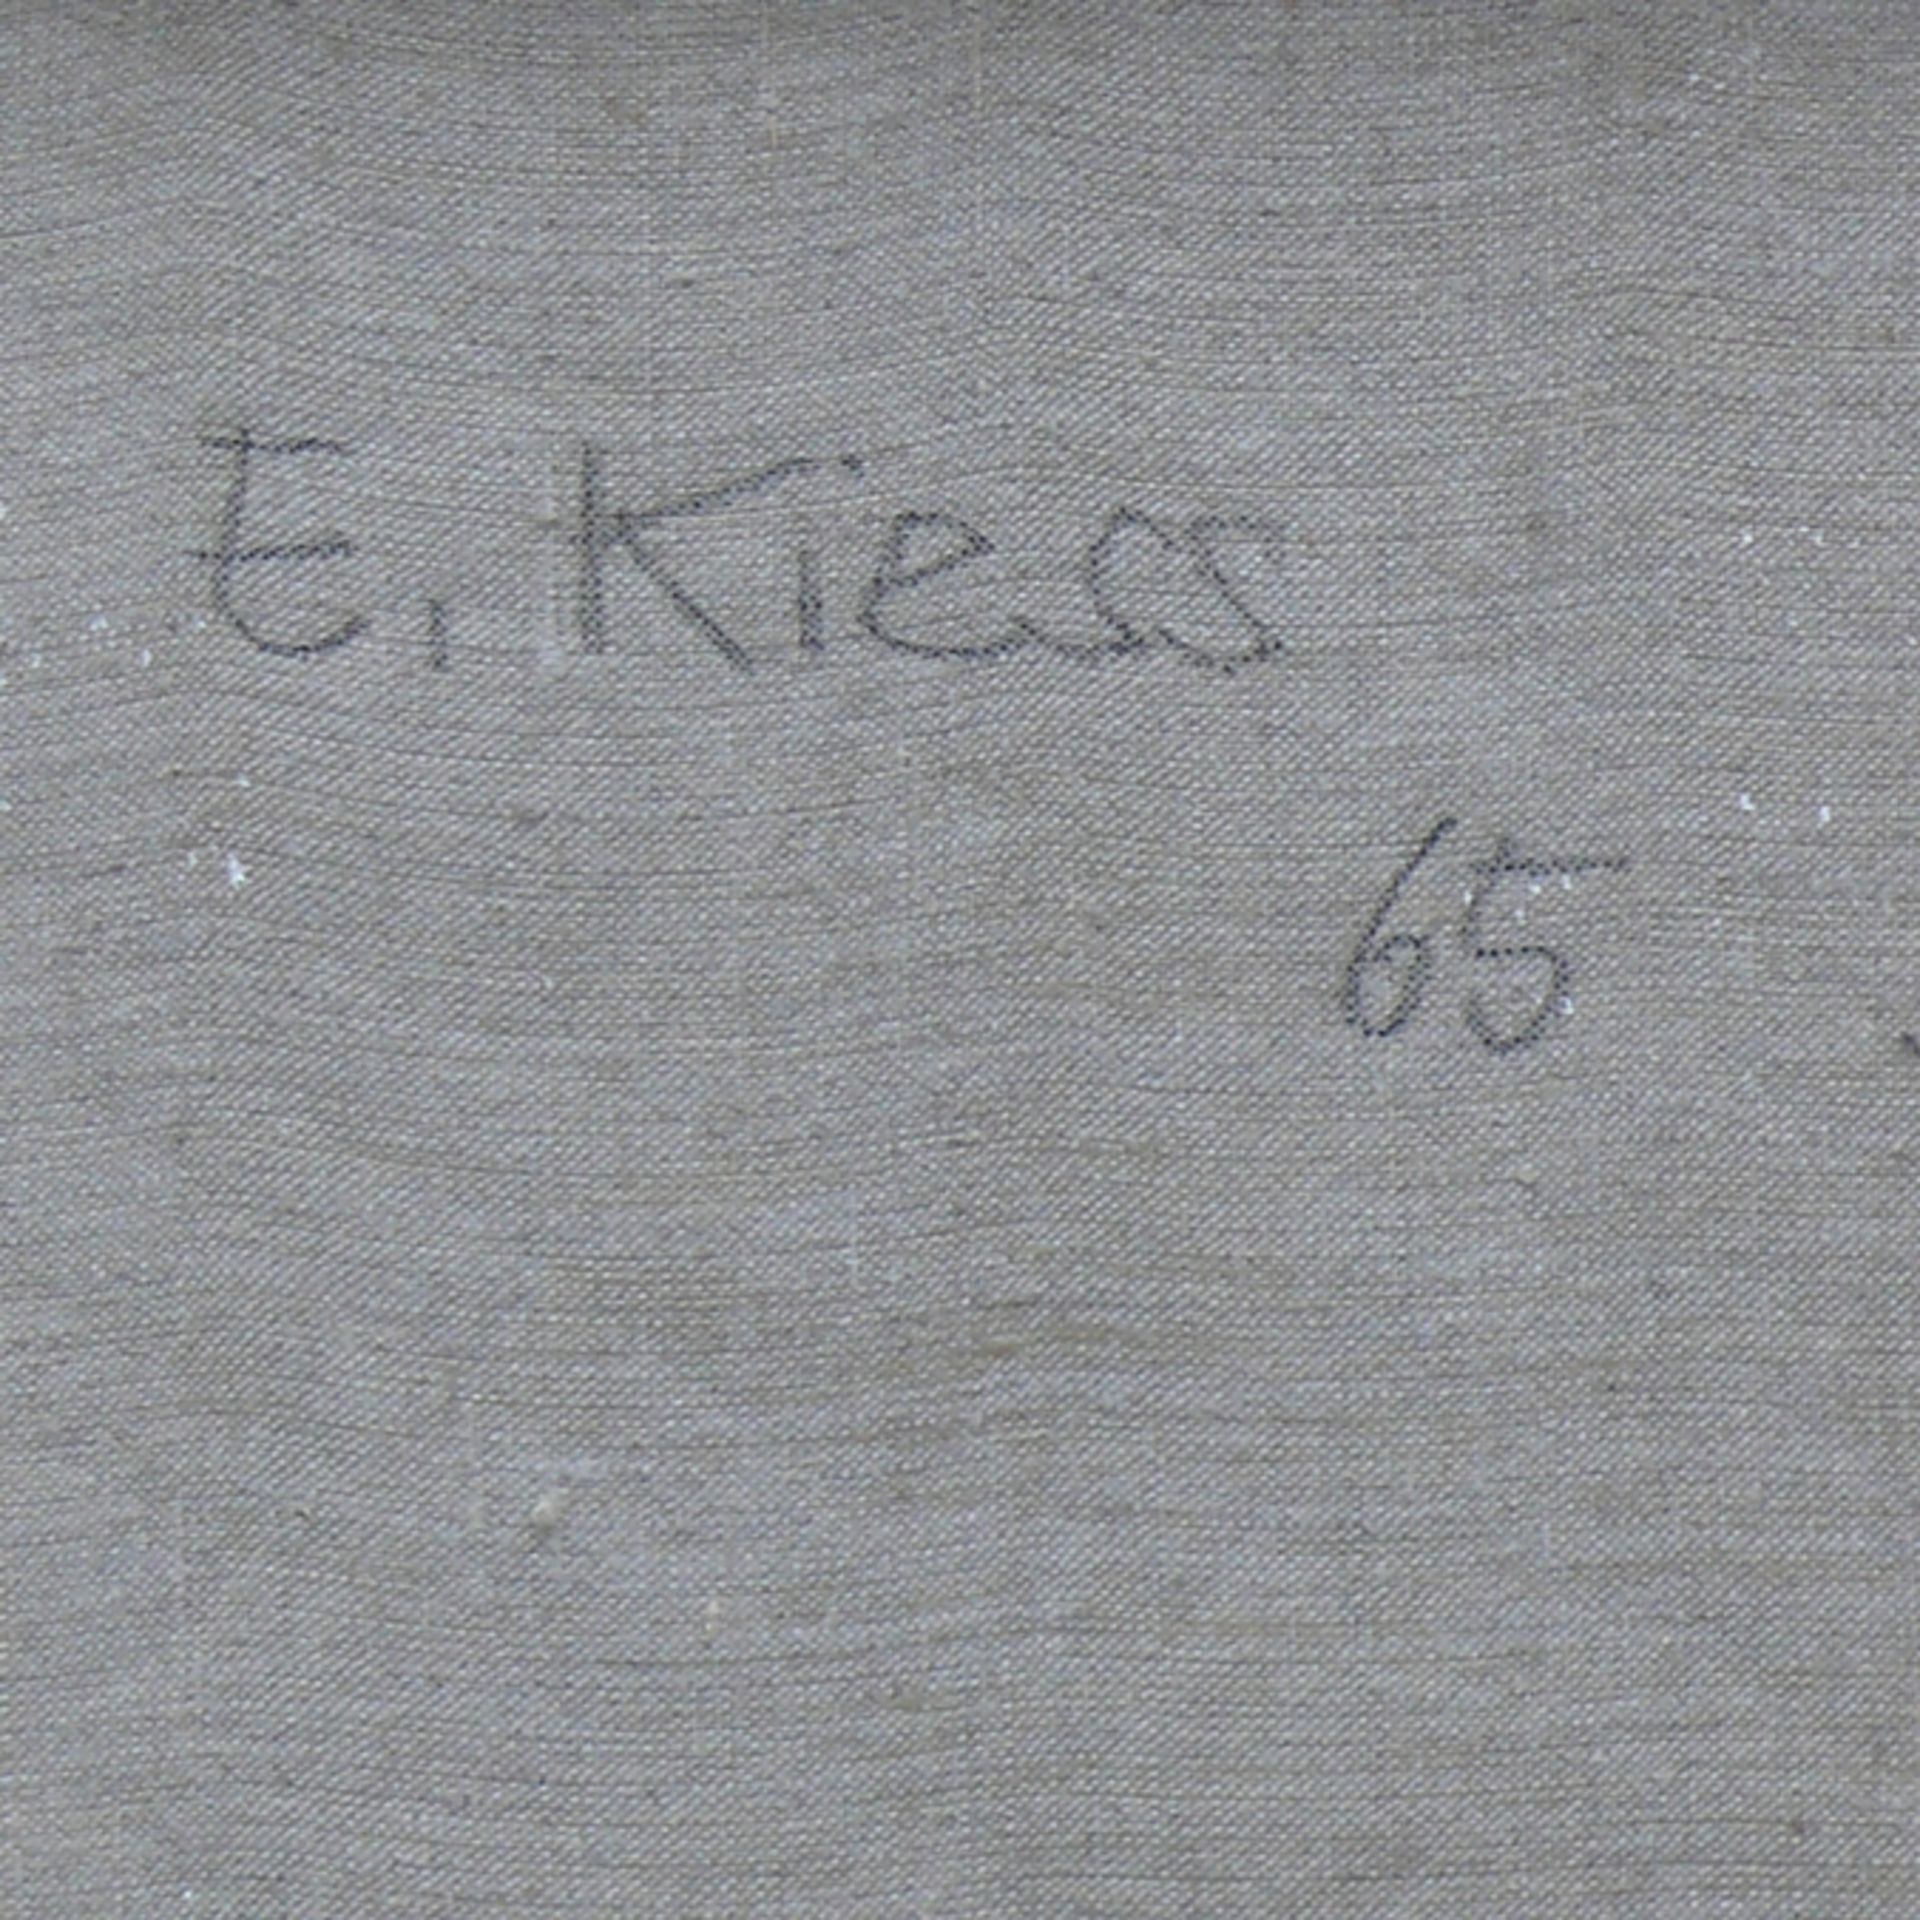 Kiess, Emil (geb. Trossingen 1930) - Bild 3 aus 4